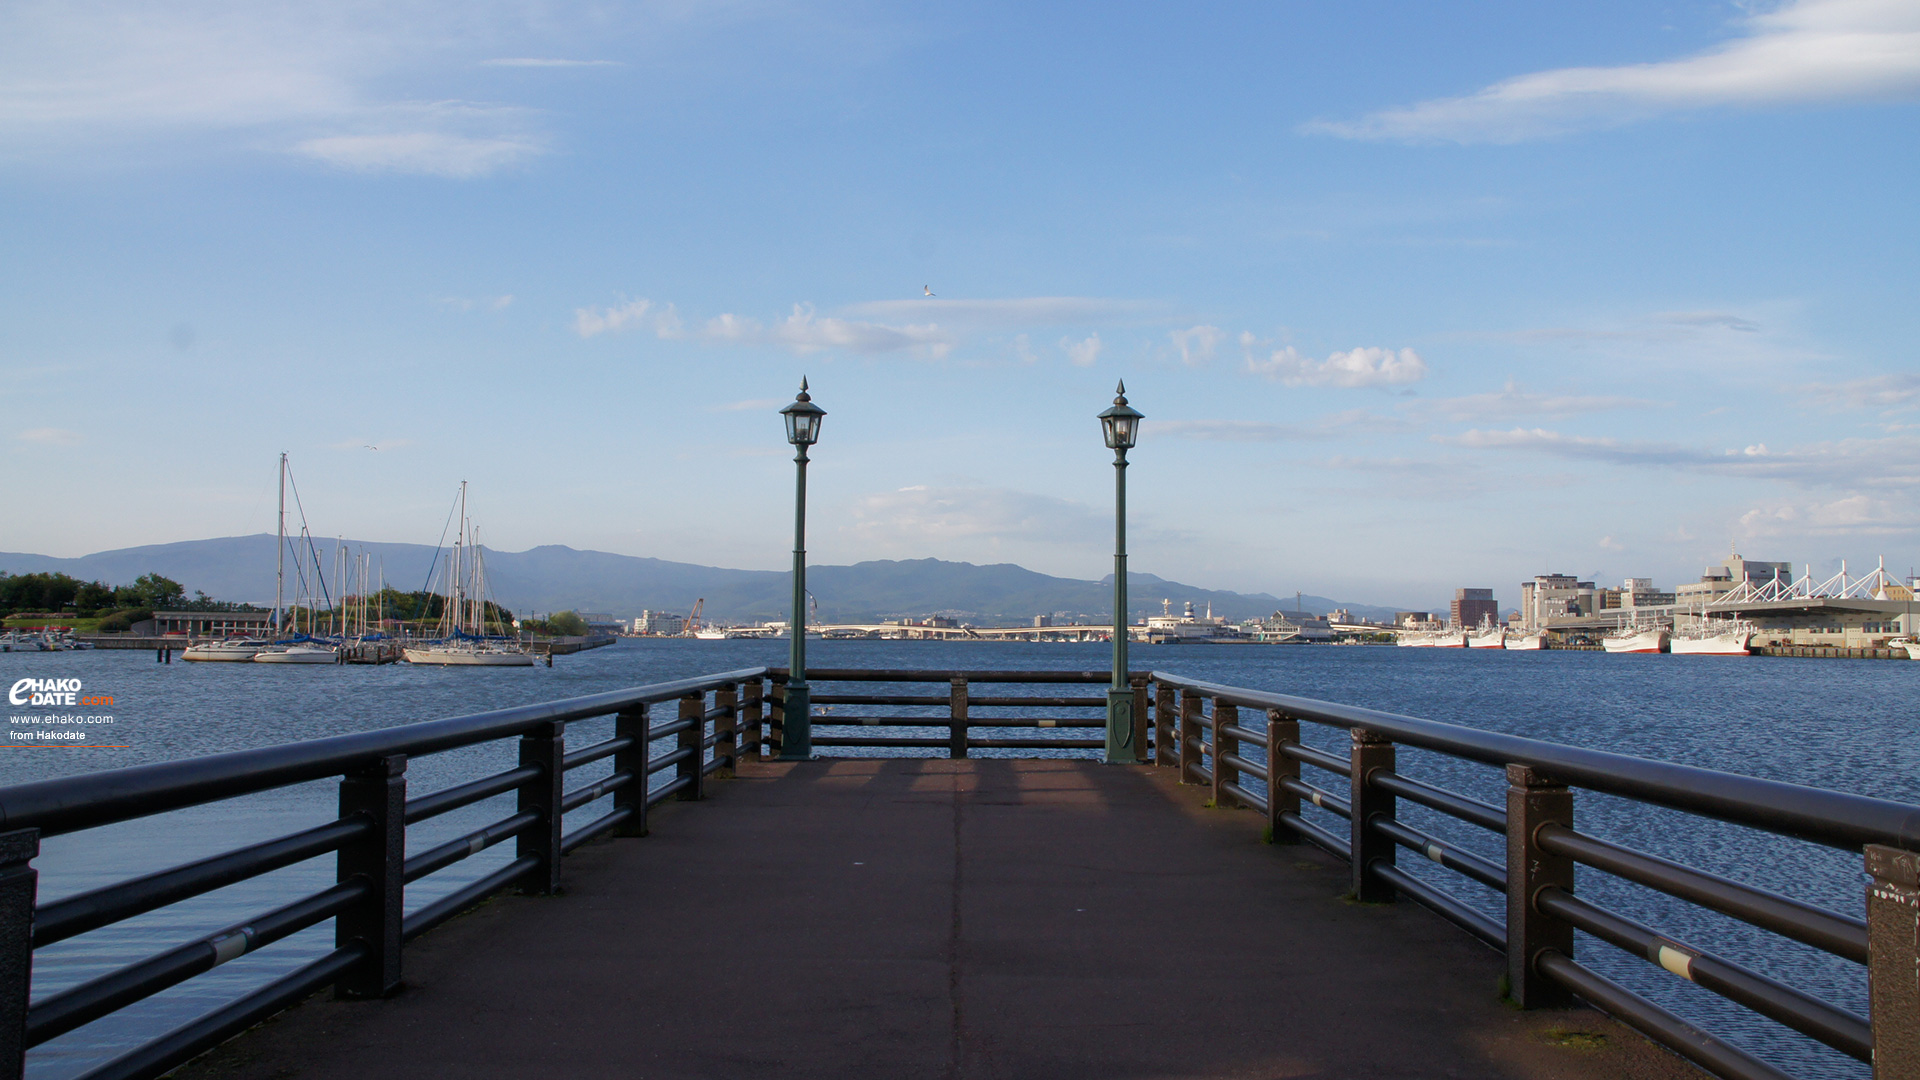 初夏の旧桟橋 函館フォト散歩壁紙 函館市 道南地域ポータル E Hakodate